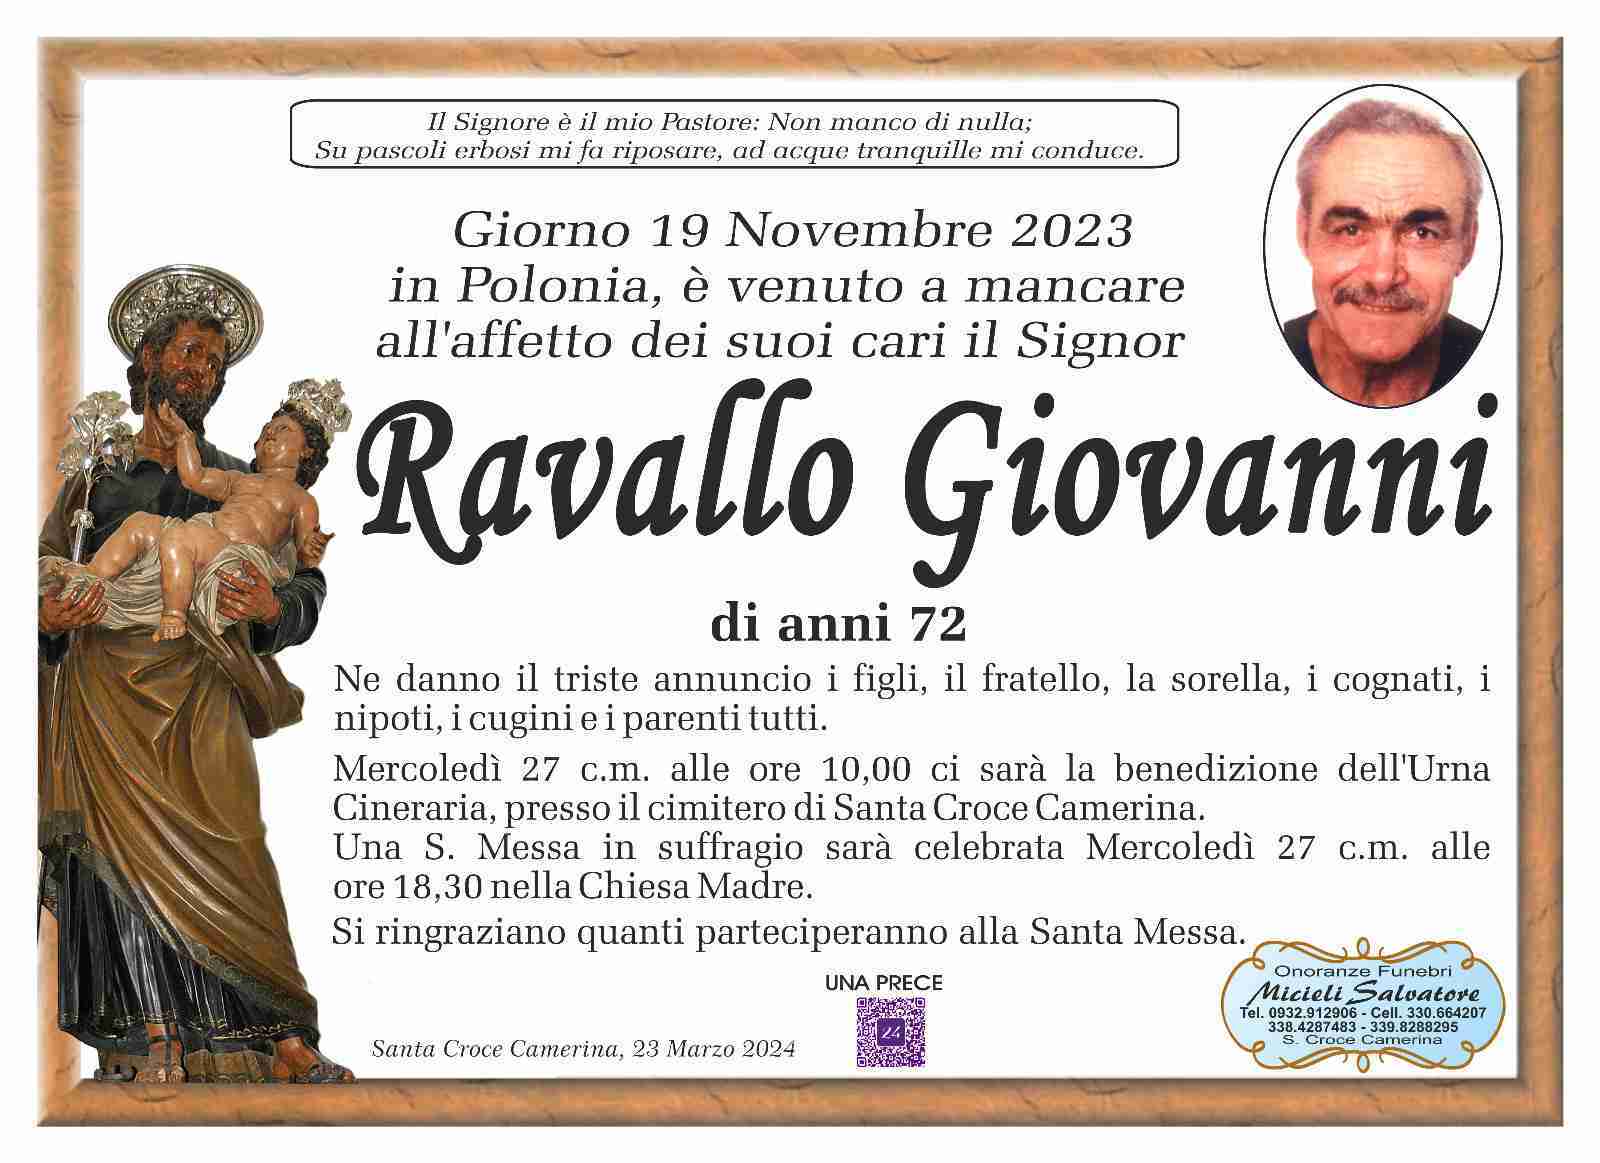 Giovanni Ravallo